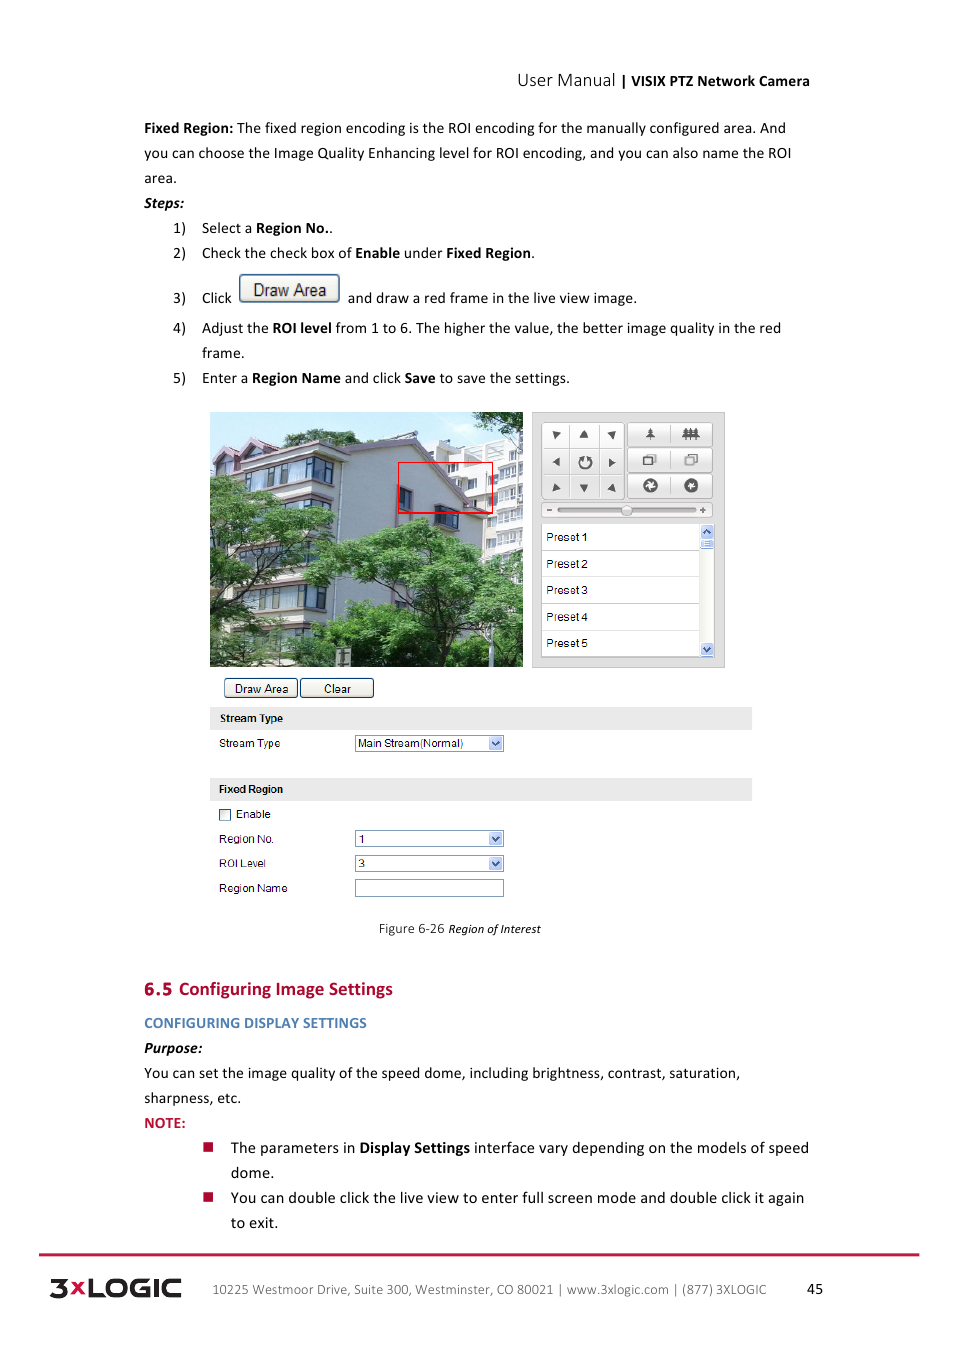 User manual, 5 configuring image settings | 3xLOGIC VISIX Camera User Manual | Page 53 / 90